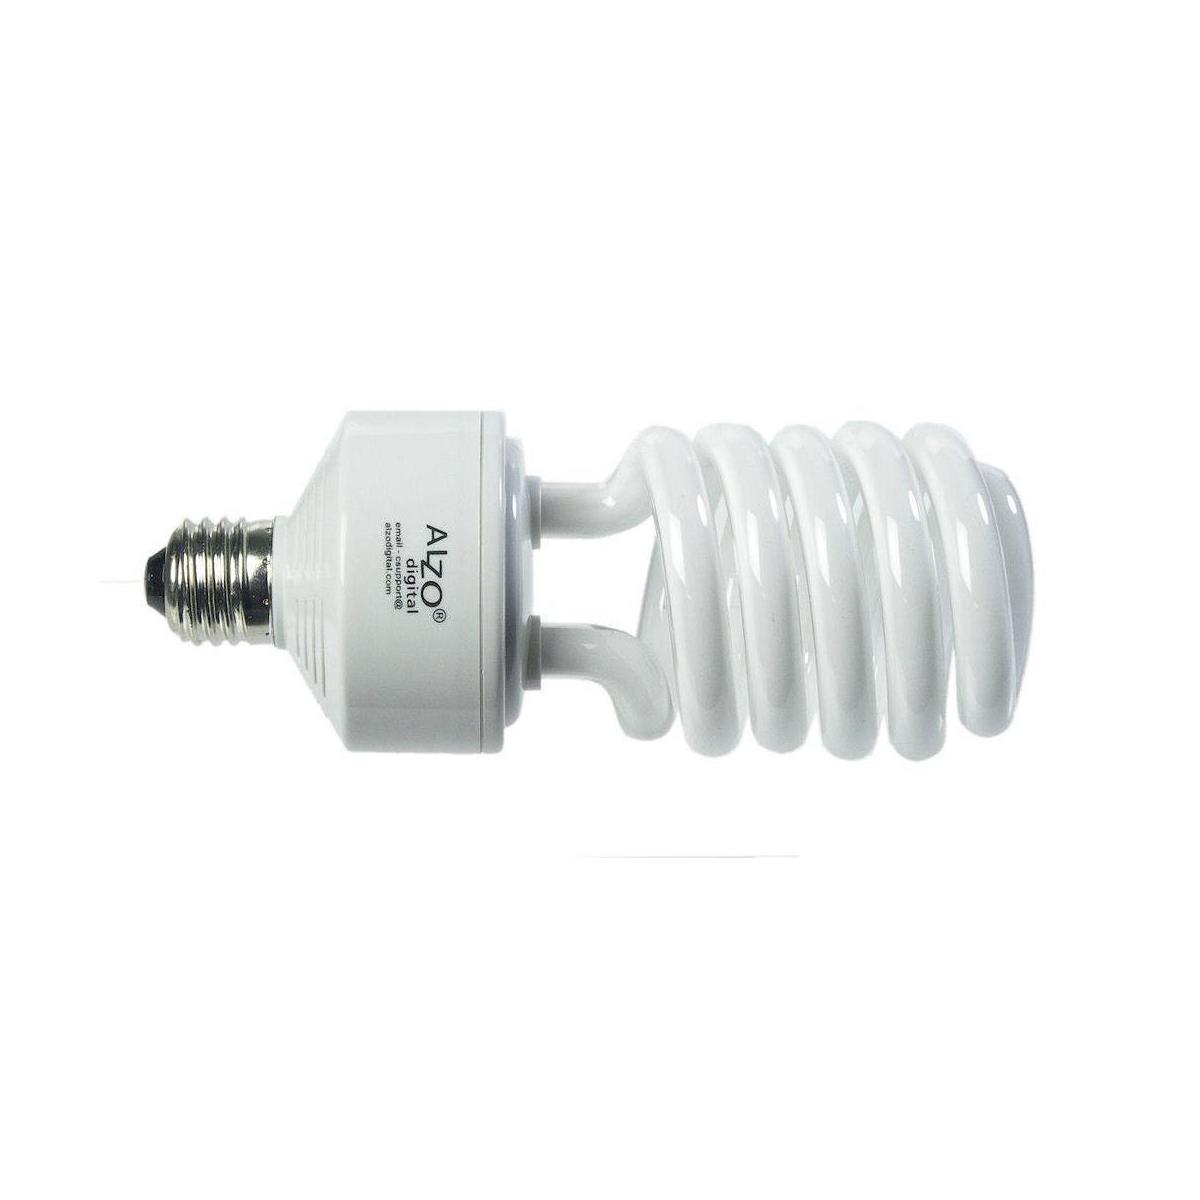 Alzo Digital 45W 220V CFL Video-Lux Photo Light Bulb, 3200K, 2800 Lumens -  1146-220-32